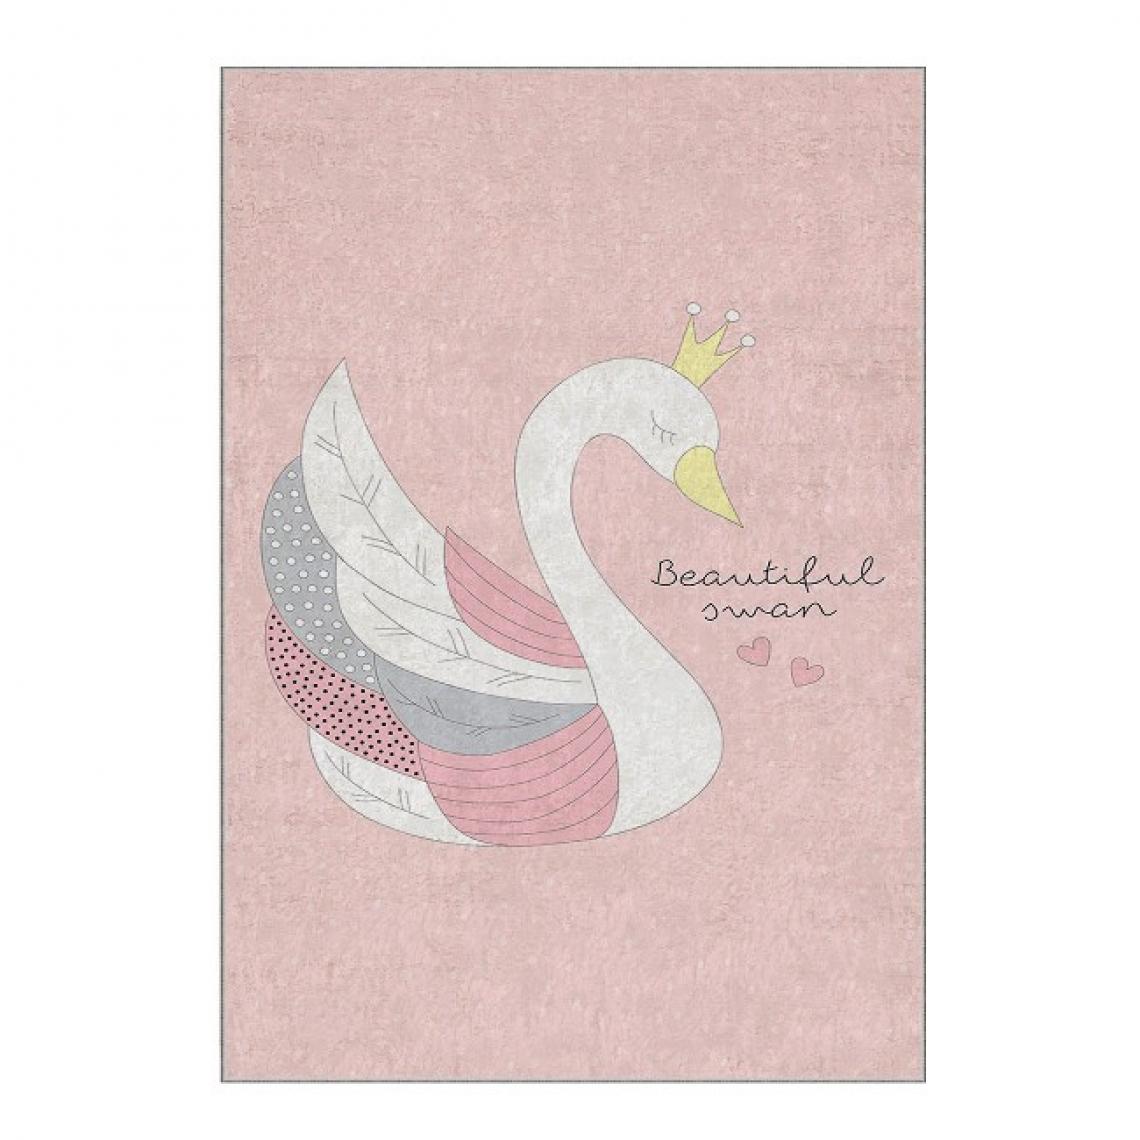 Homemania - HOMEMANIA Tapis pour enfants Swan - Rose, Gris, Blanc - 100 x 140 cm - Tapis